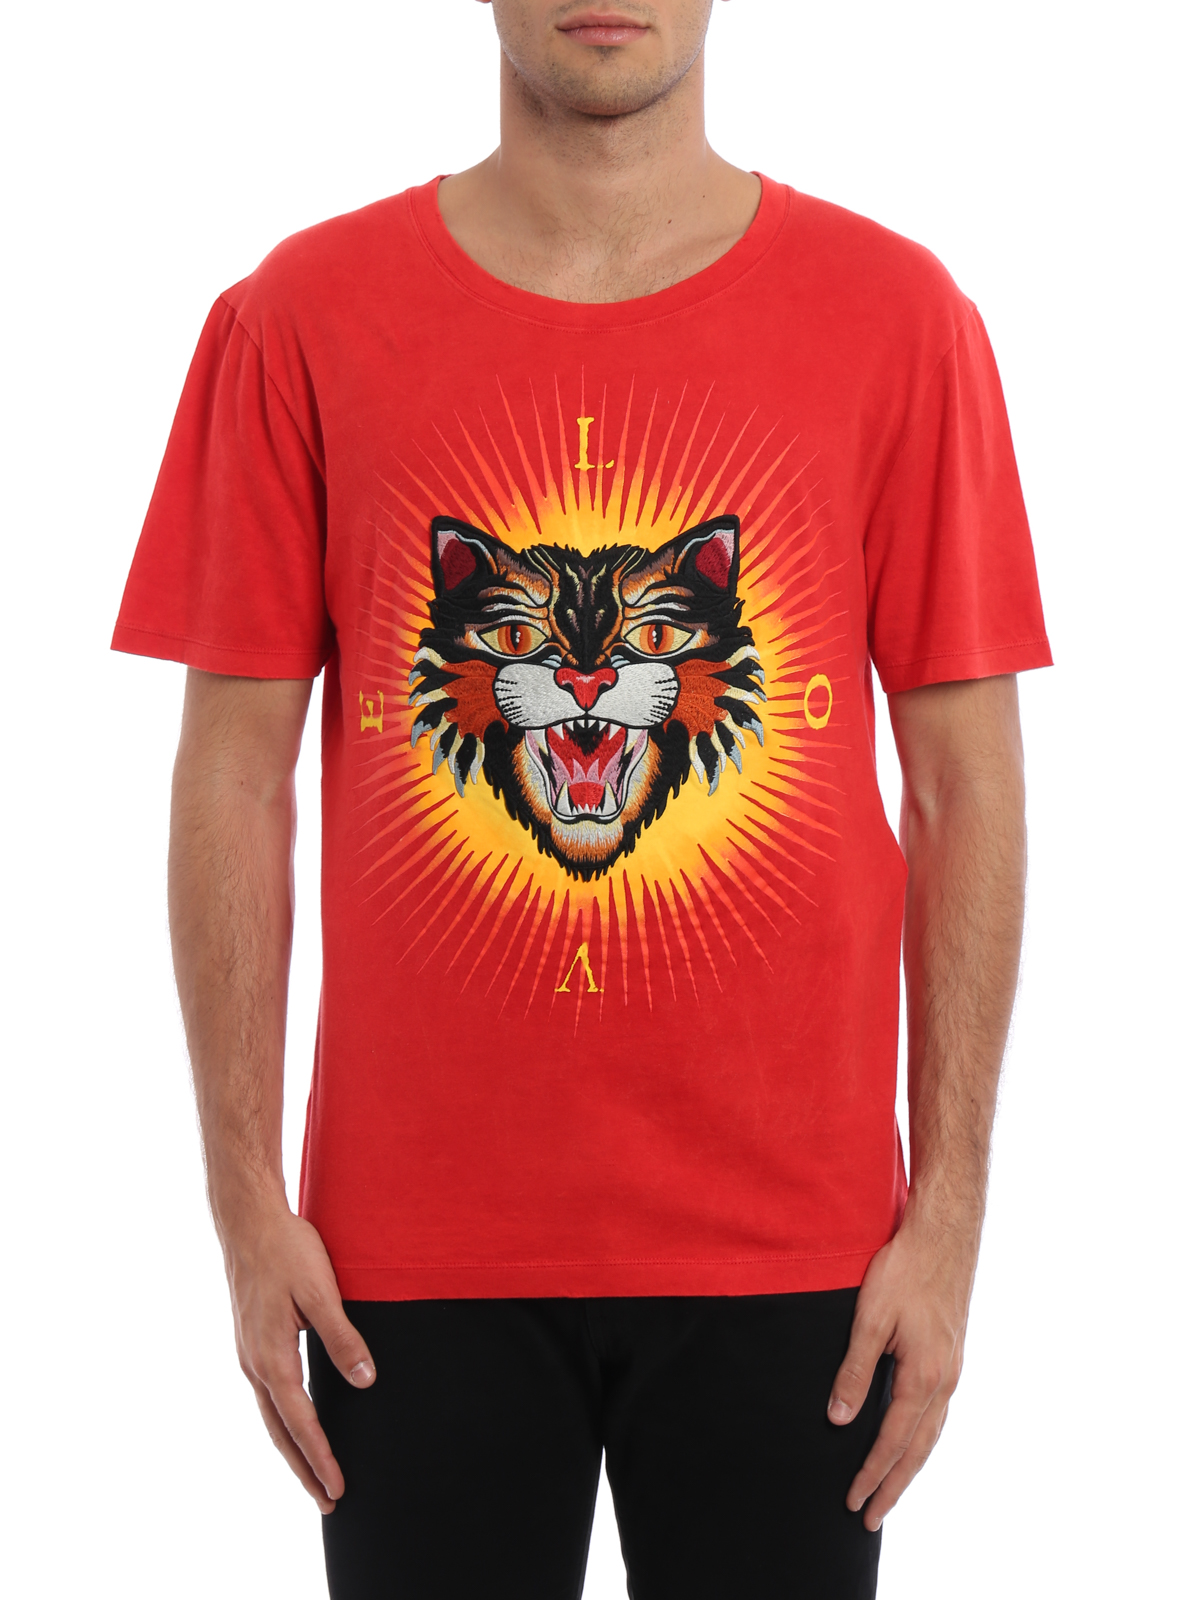 Camisetas Gucci - Camiseta - Angry Cat 442670X5U166600 | iKRIX.com